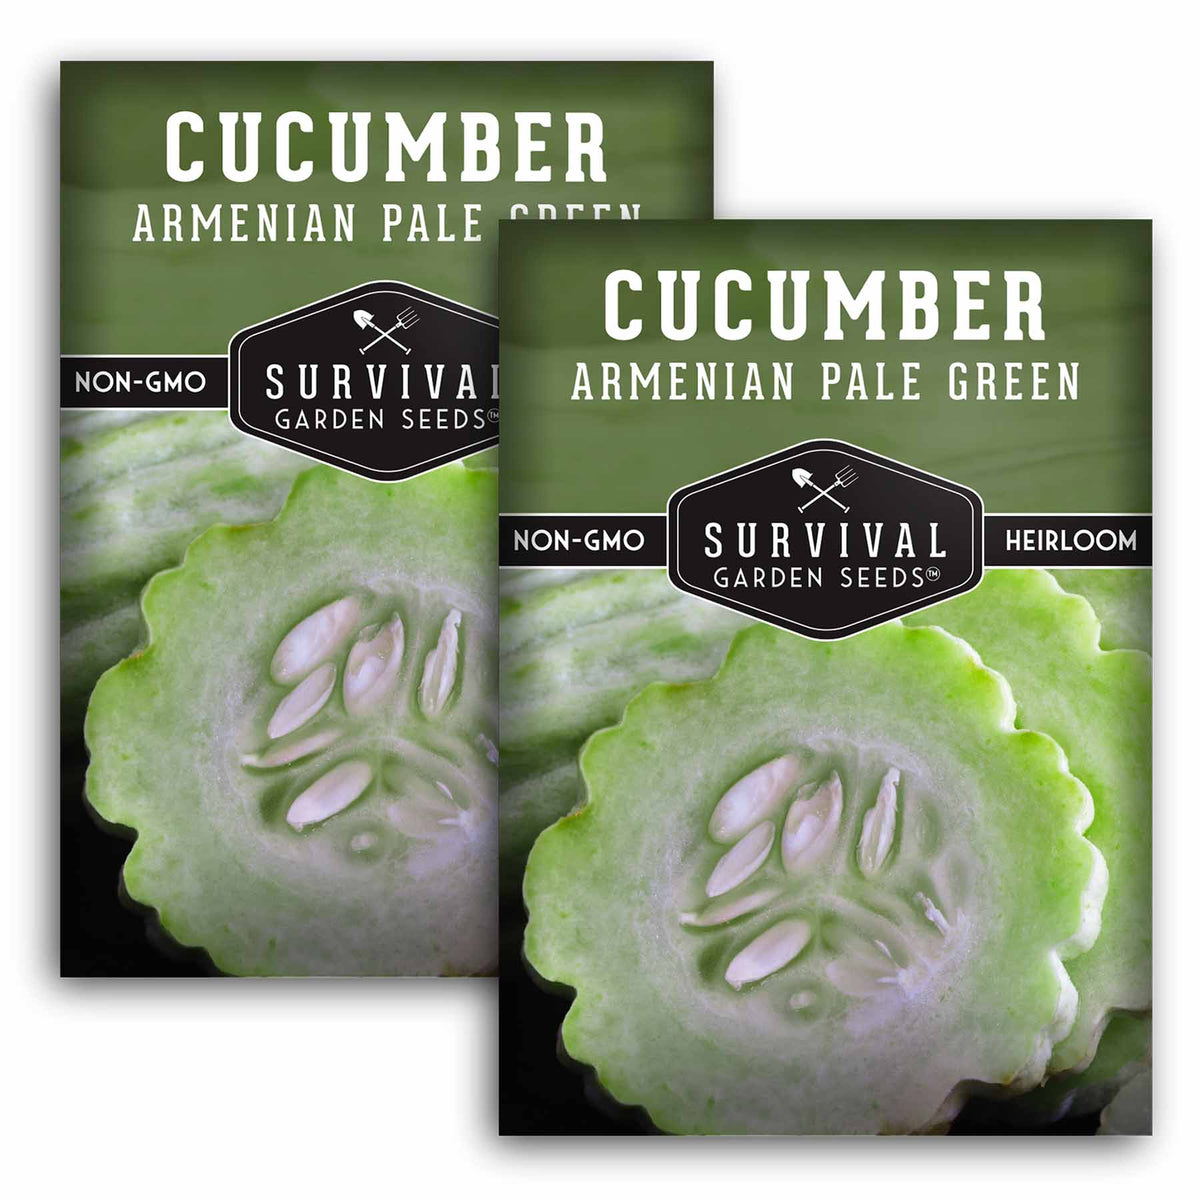 2 packets of Armenian Pale Green Cucumber seeds